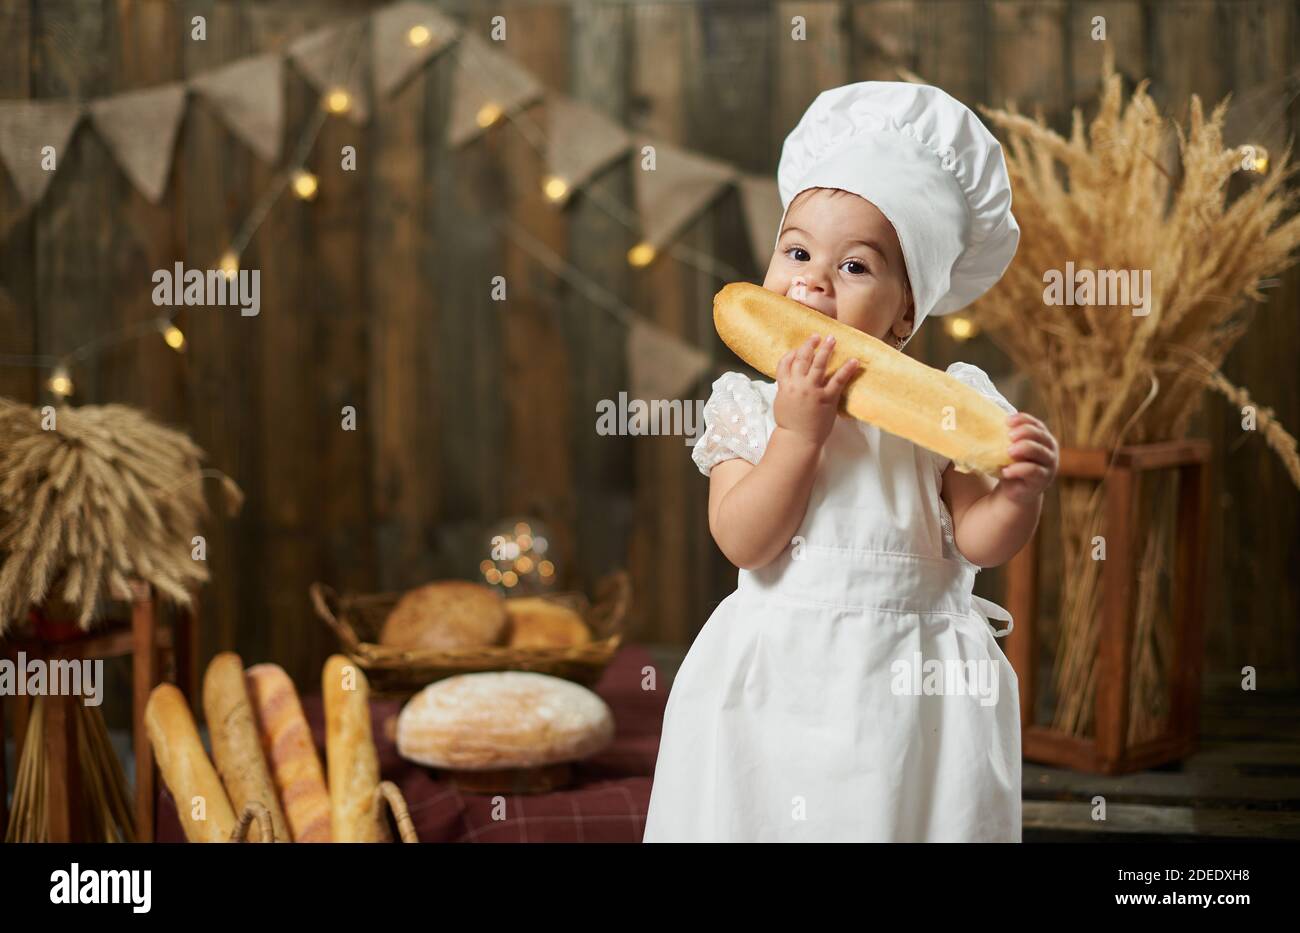 Cute baby girl wearing baker costume eating long bread Stock Photo